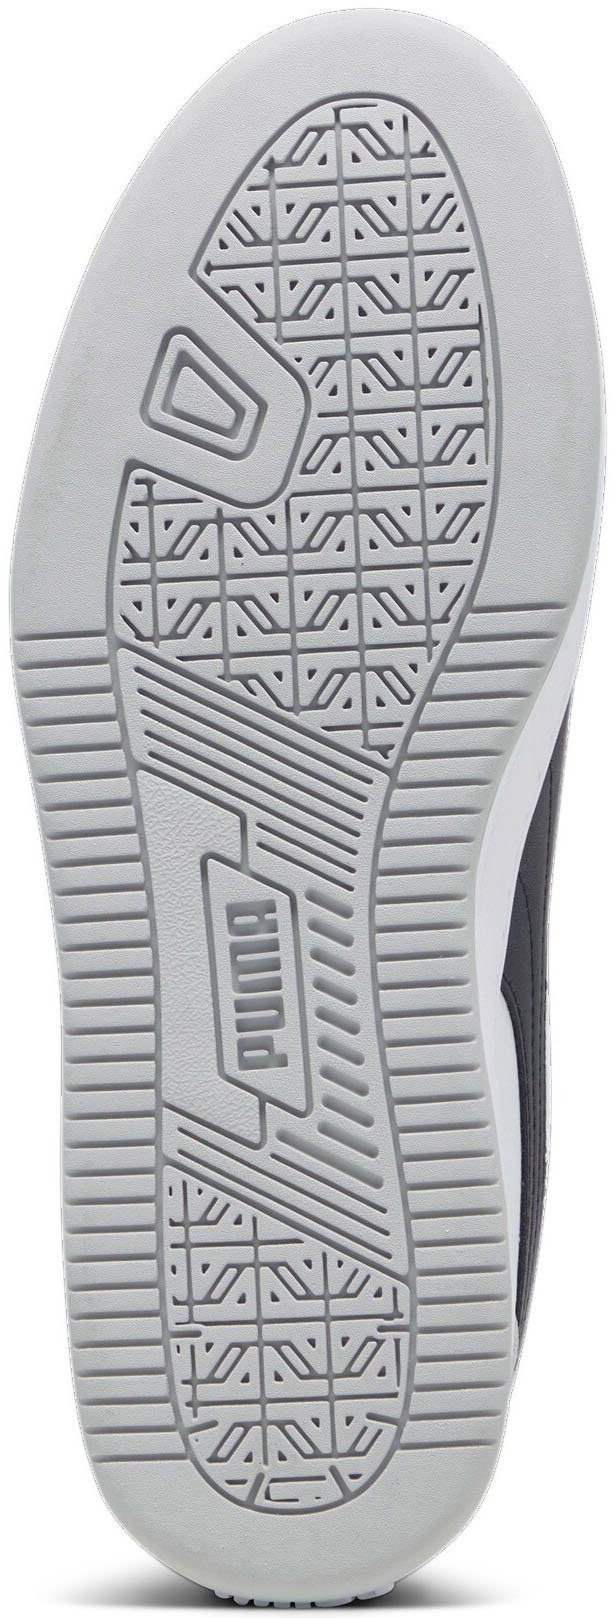 CAVEN Sneaker Gray-Gold 2.0 PUMA White-PUMA PUMA Black-Ash